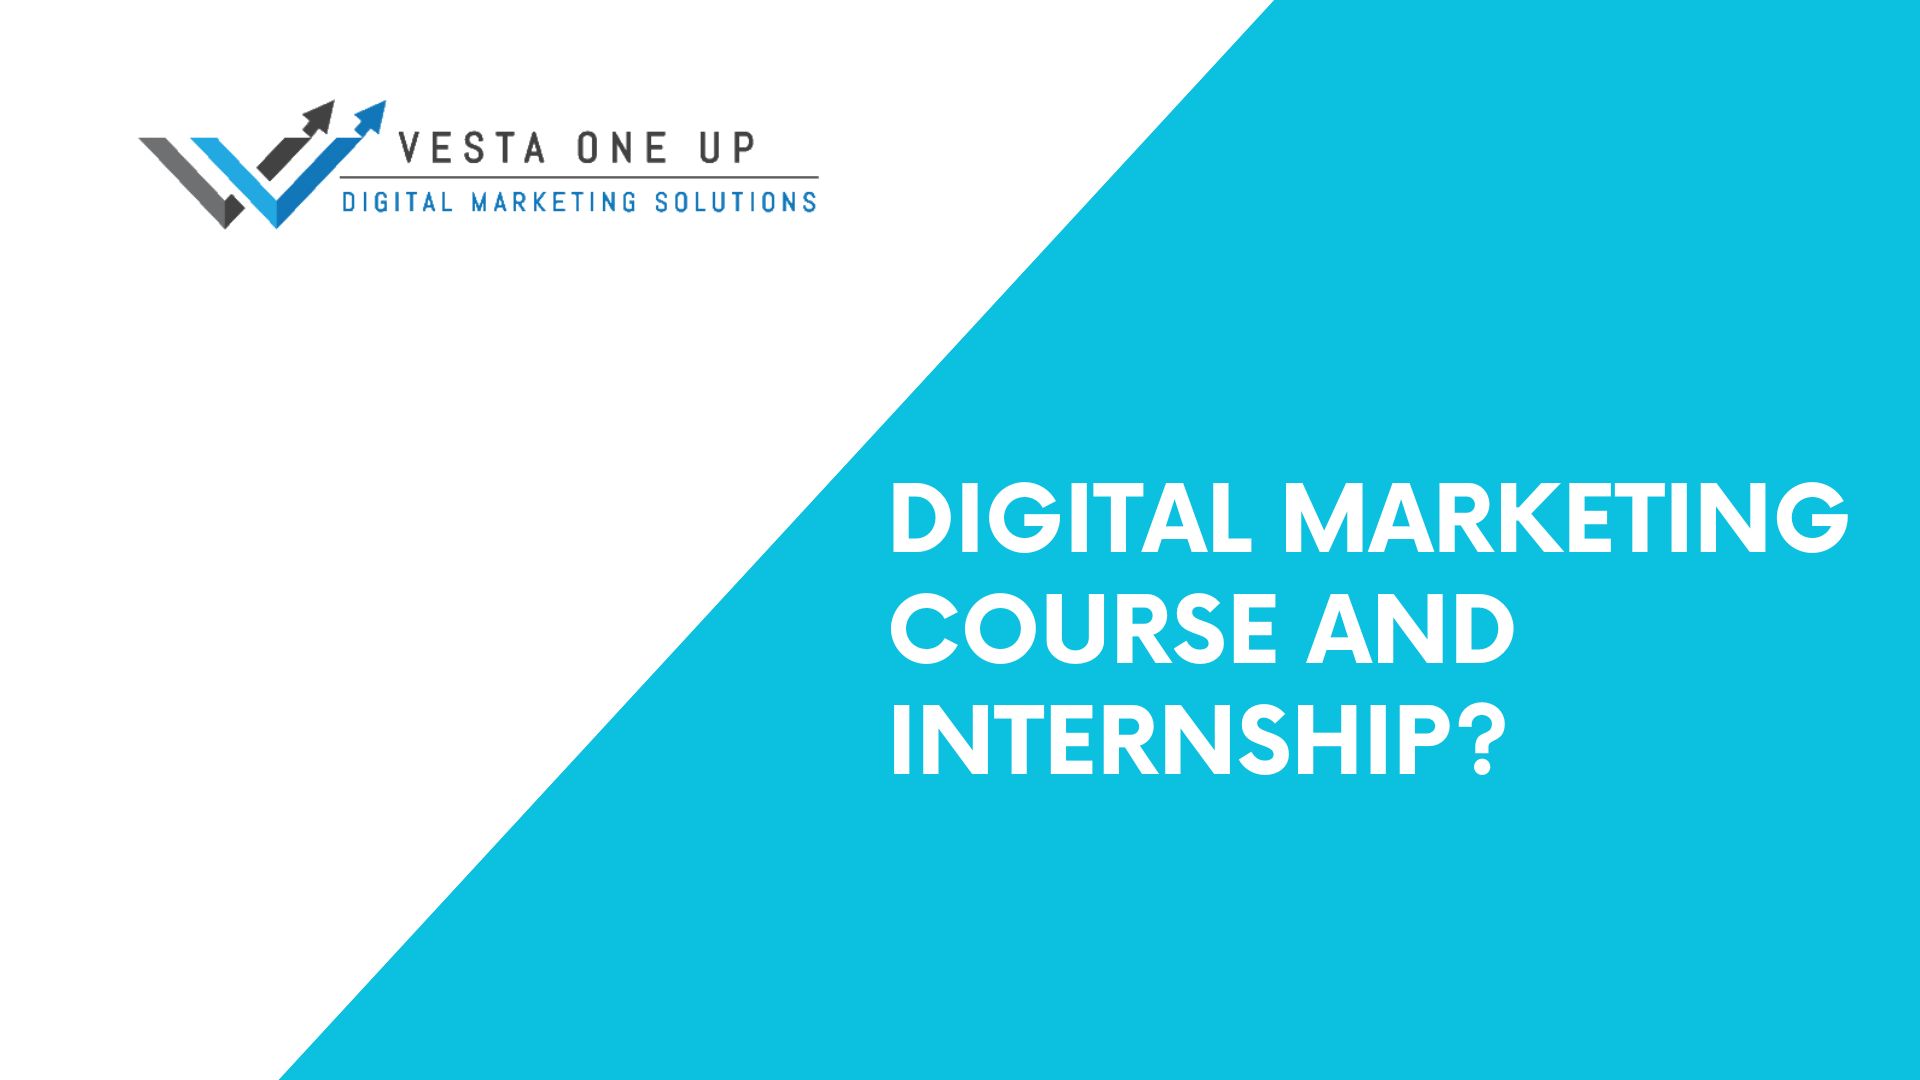 Digital marketing course and internship?